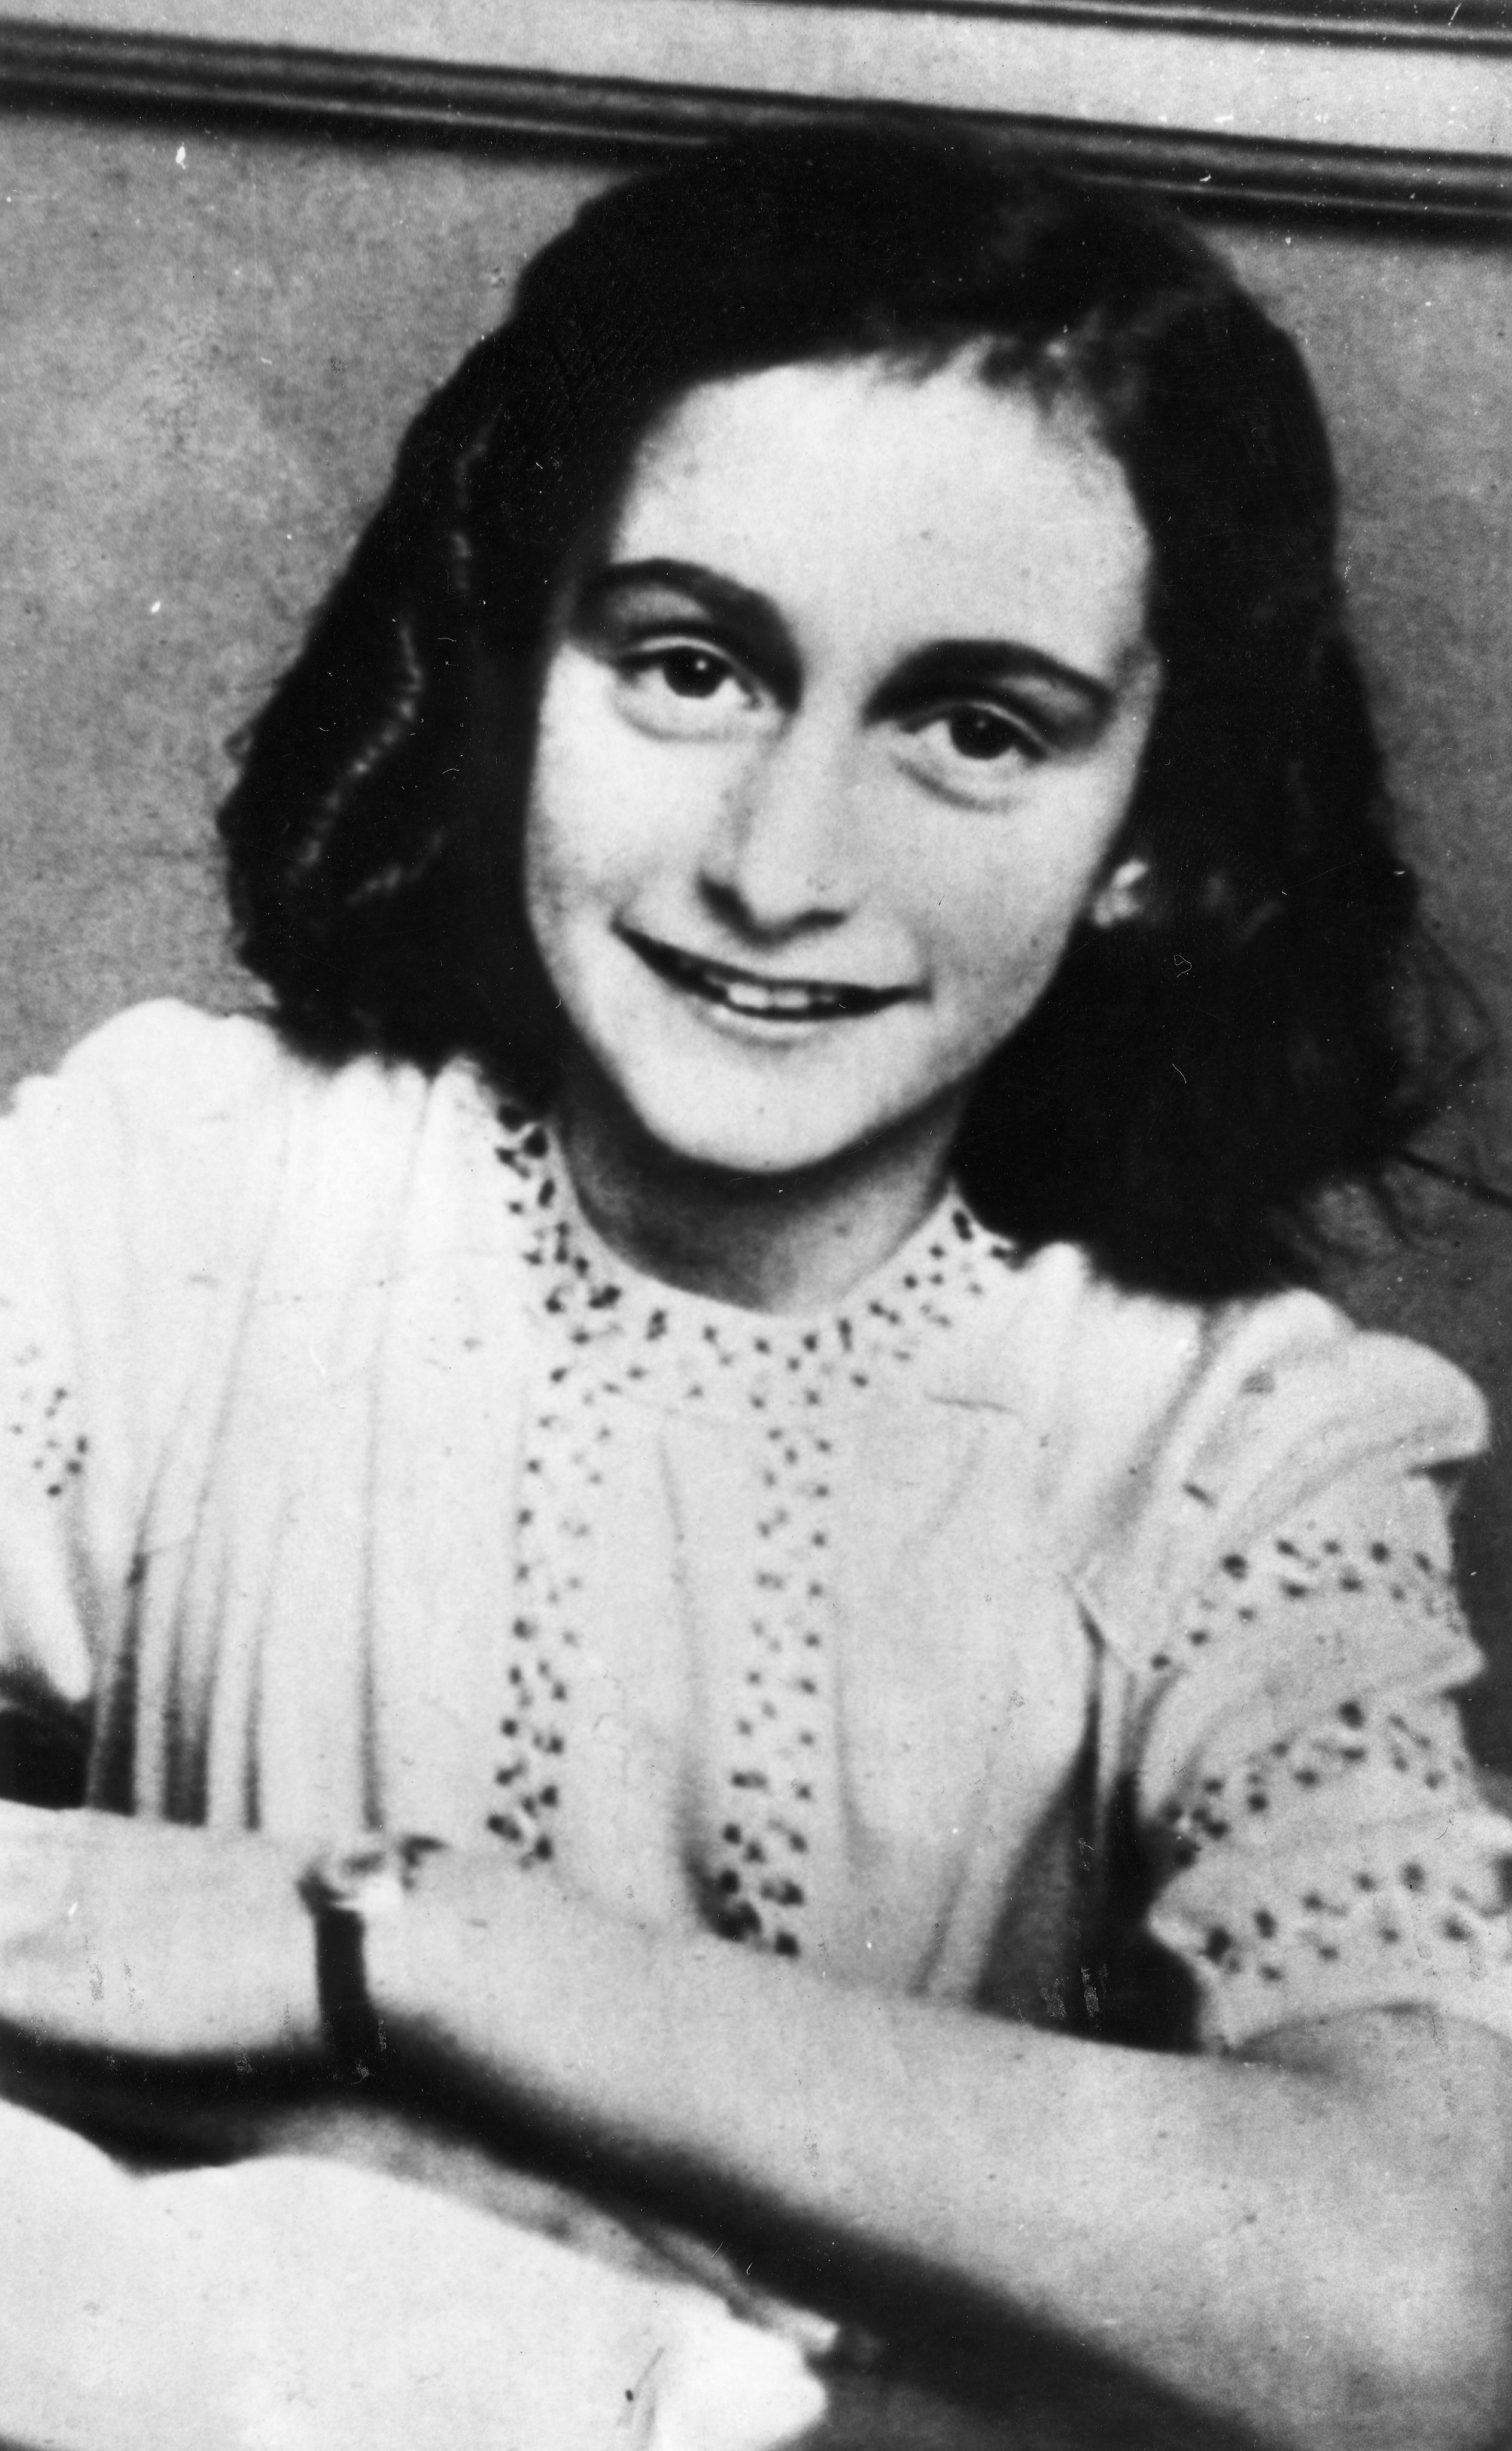 Anne Frank diary author